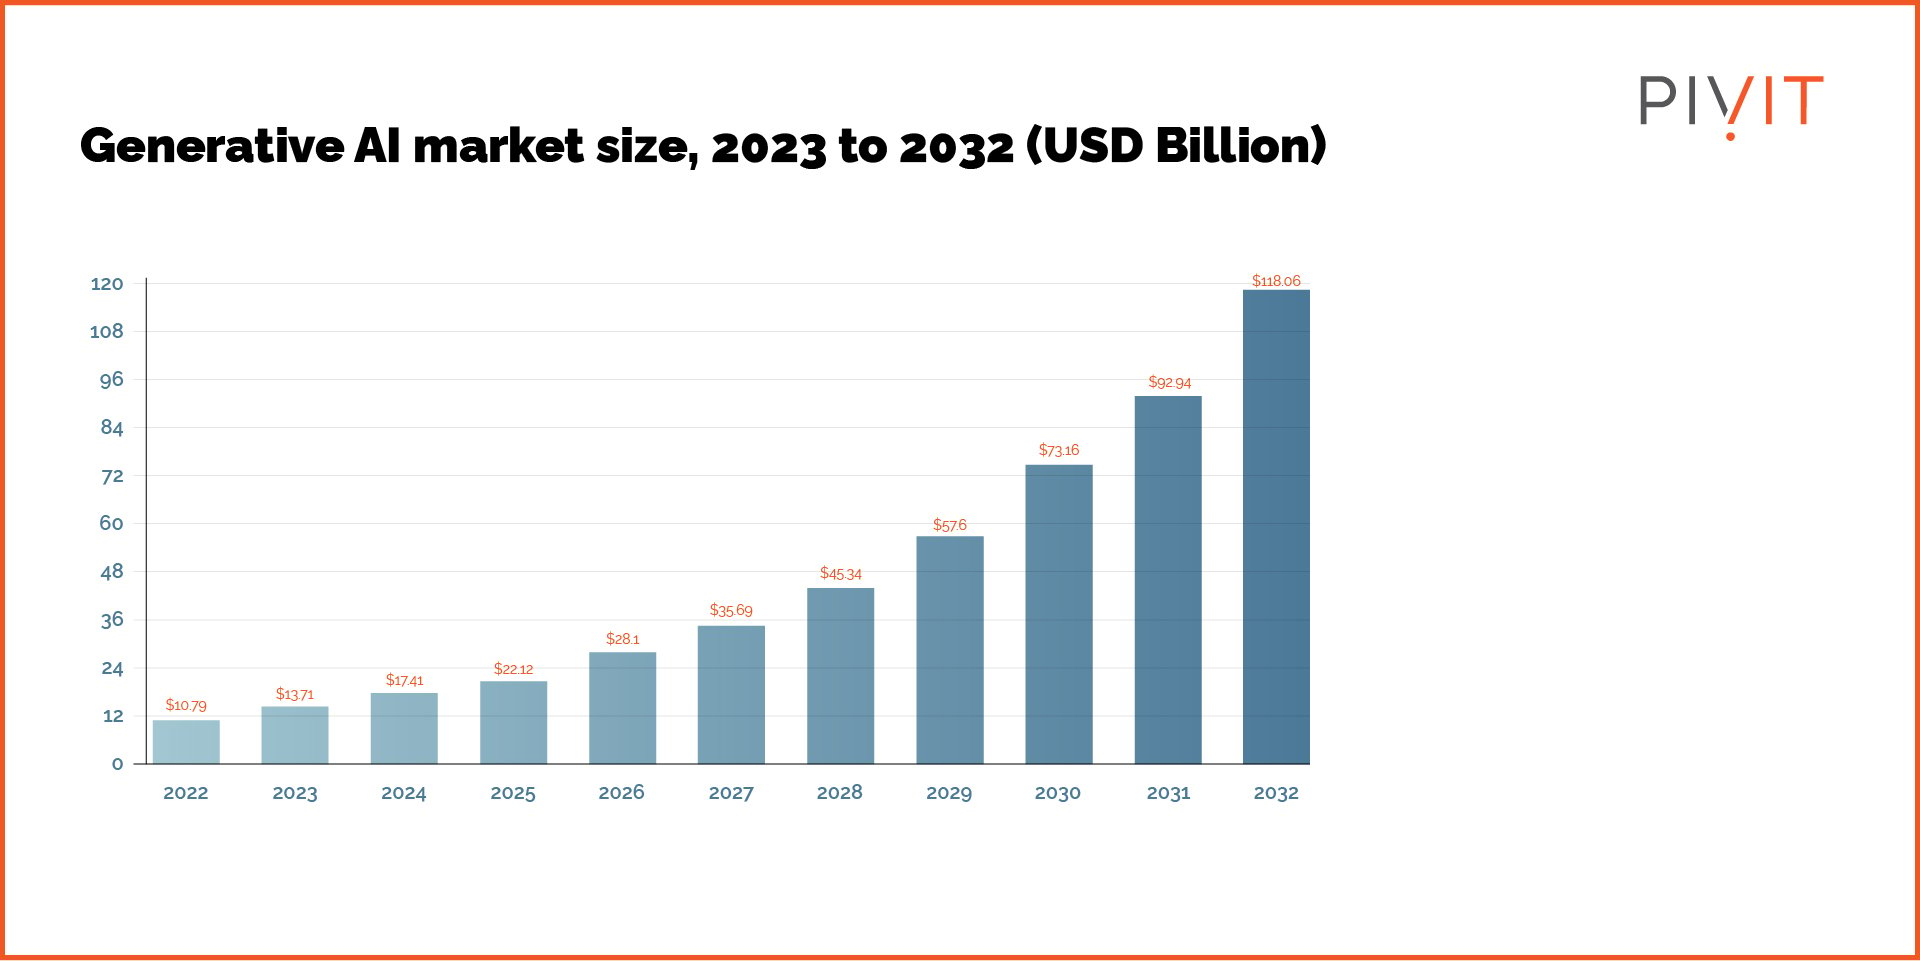 Generative AI market size from 2023 to 2032 (USD billion)